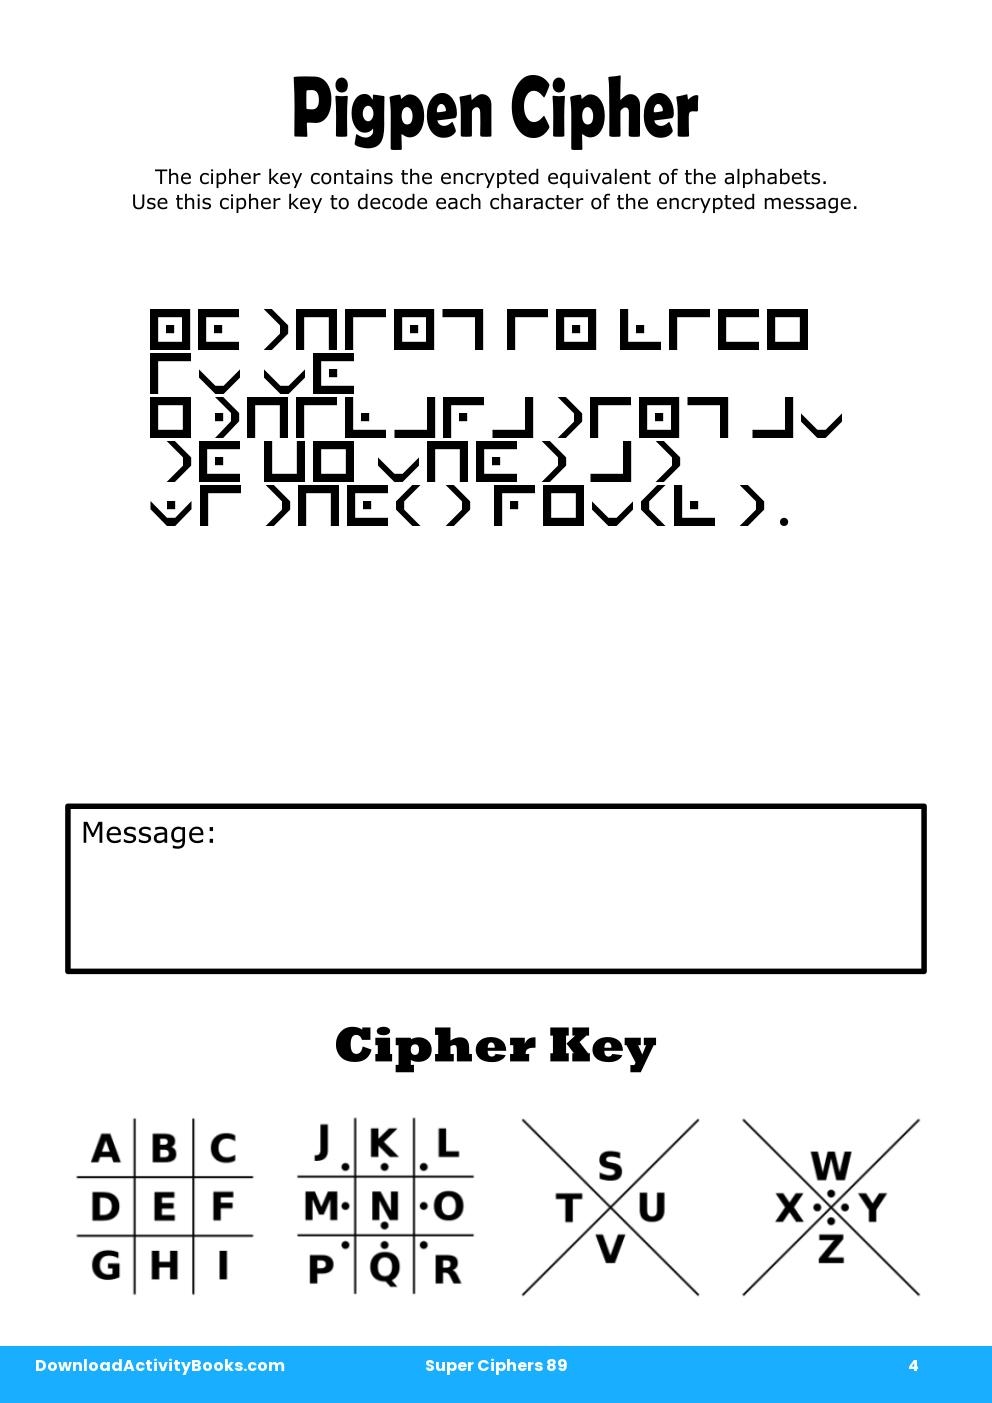 Pigpen Cipher in Super Ciphers 89